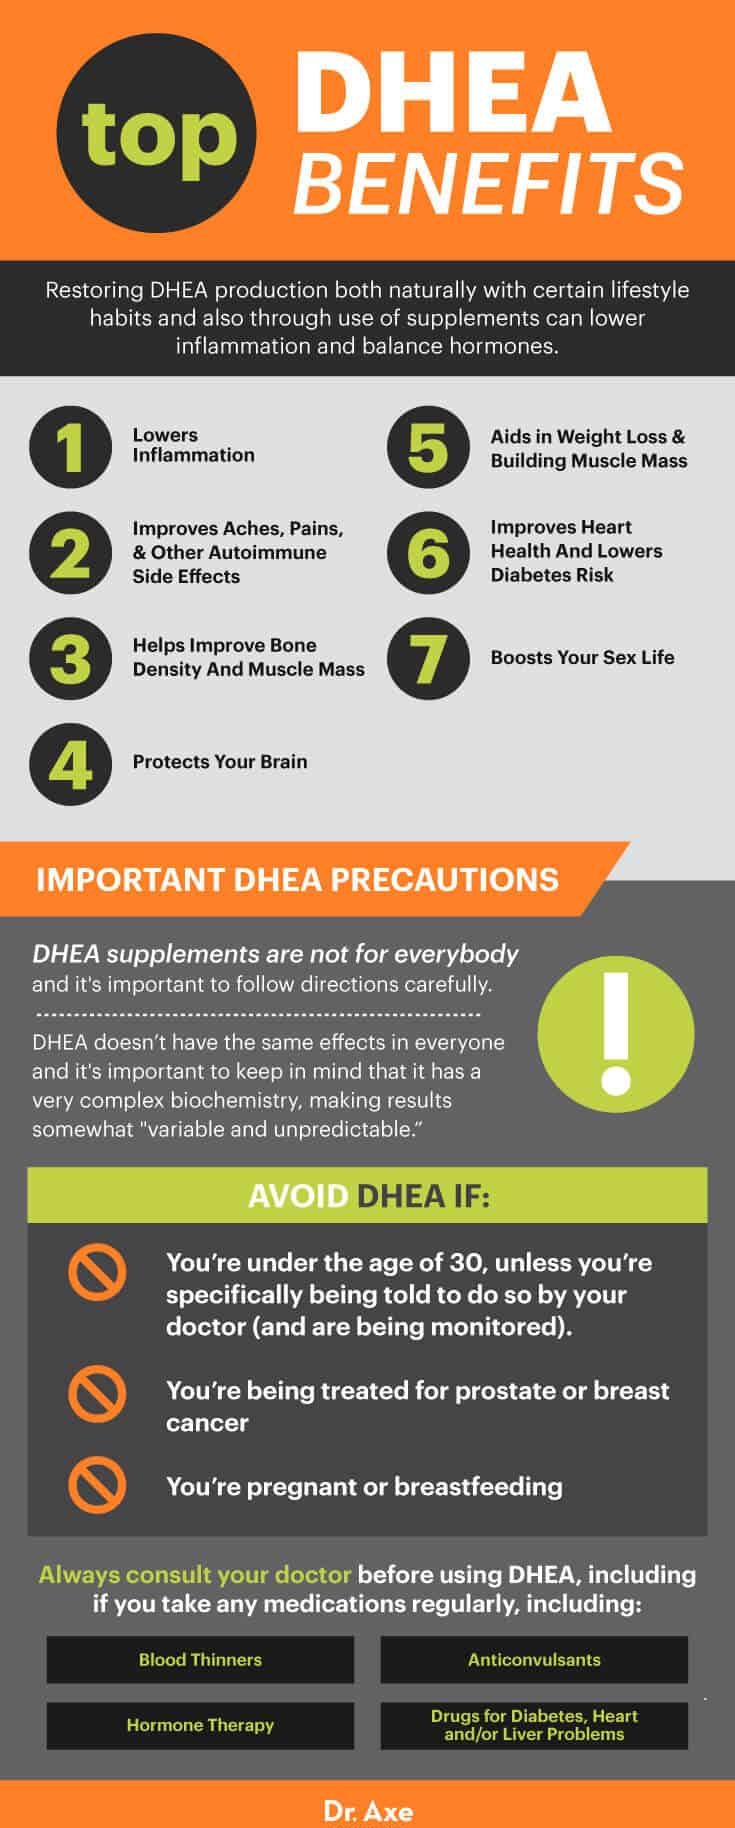 DHEA benefits - Dr. Axe